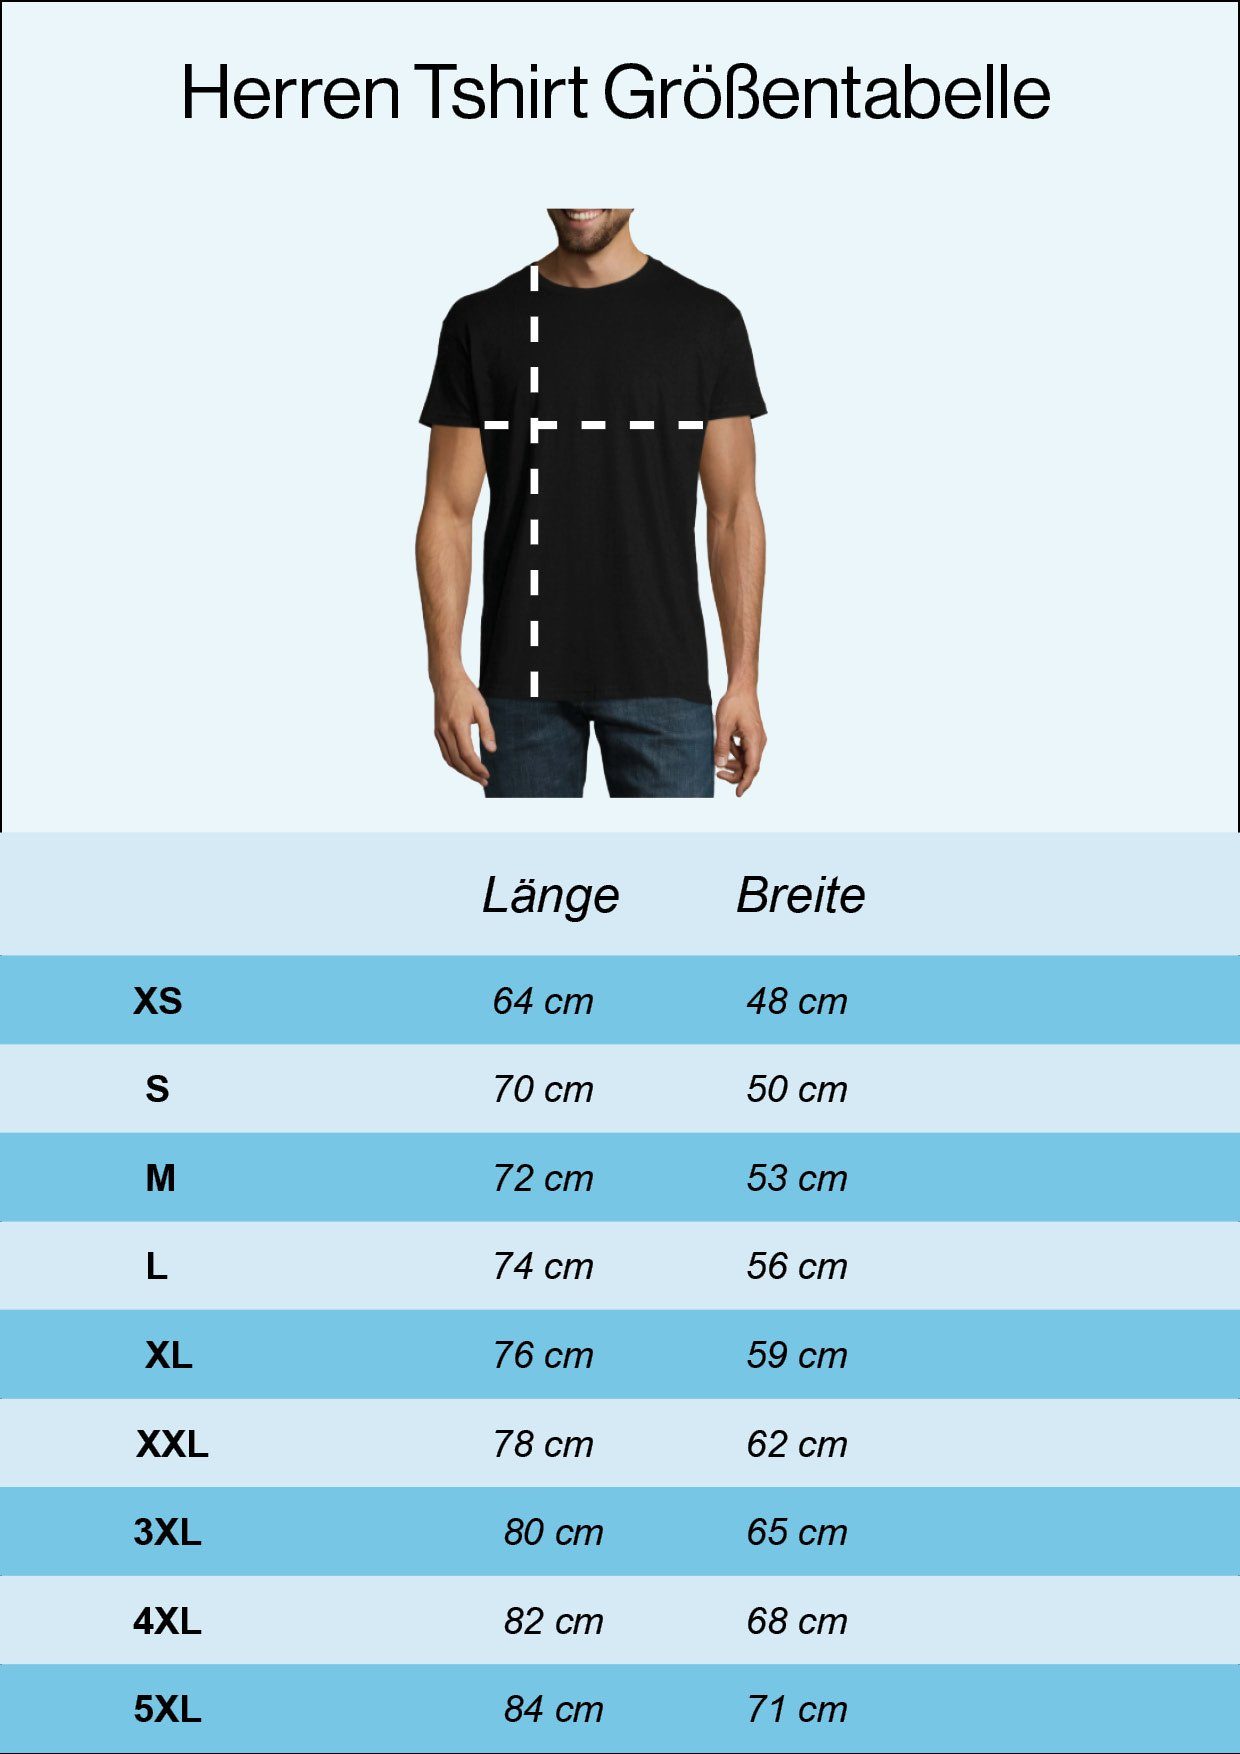 Youth Designz T-Shirt Big Gaming-Serien mit Popart trendigem Navyblau Herren Shirt Motiv Bang